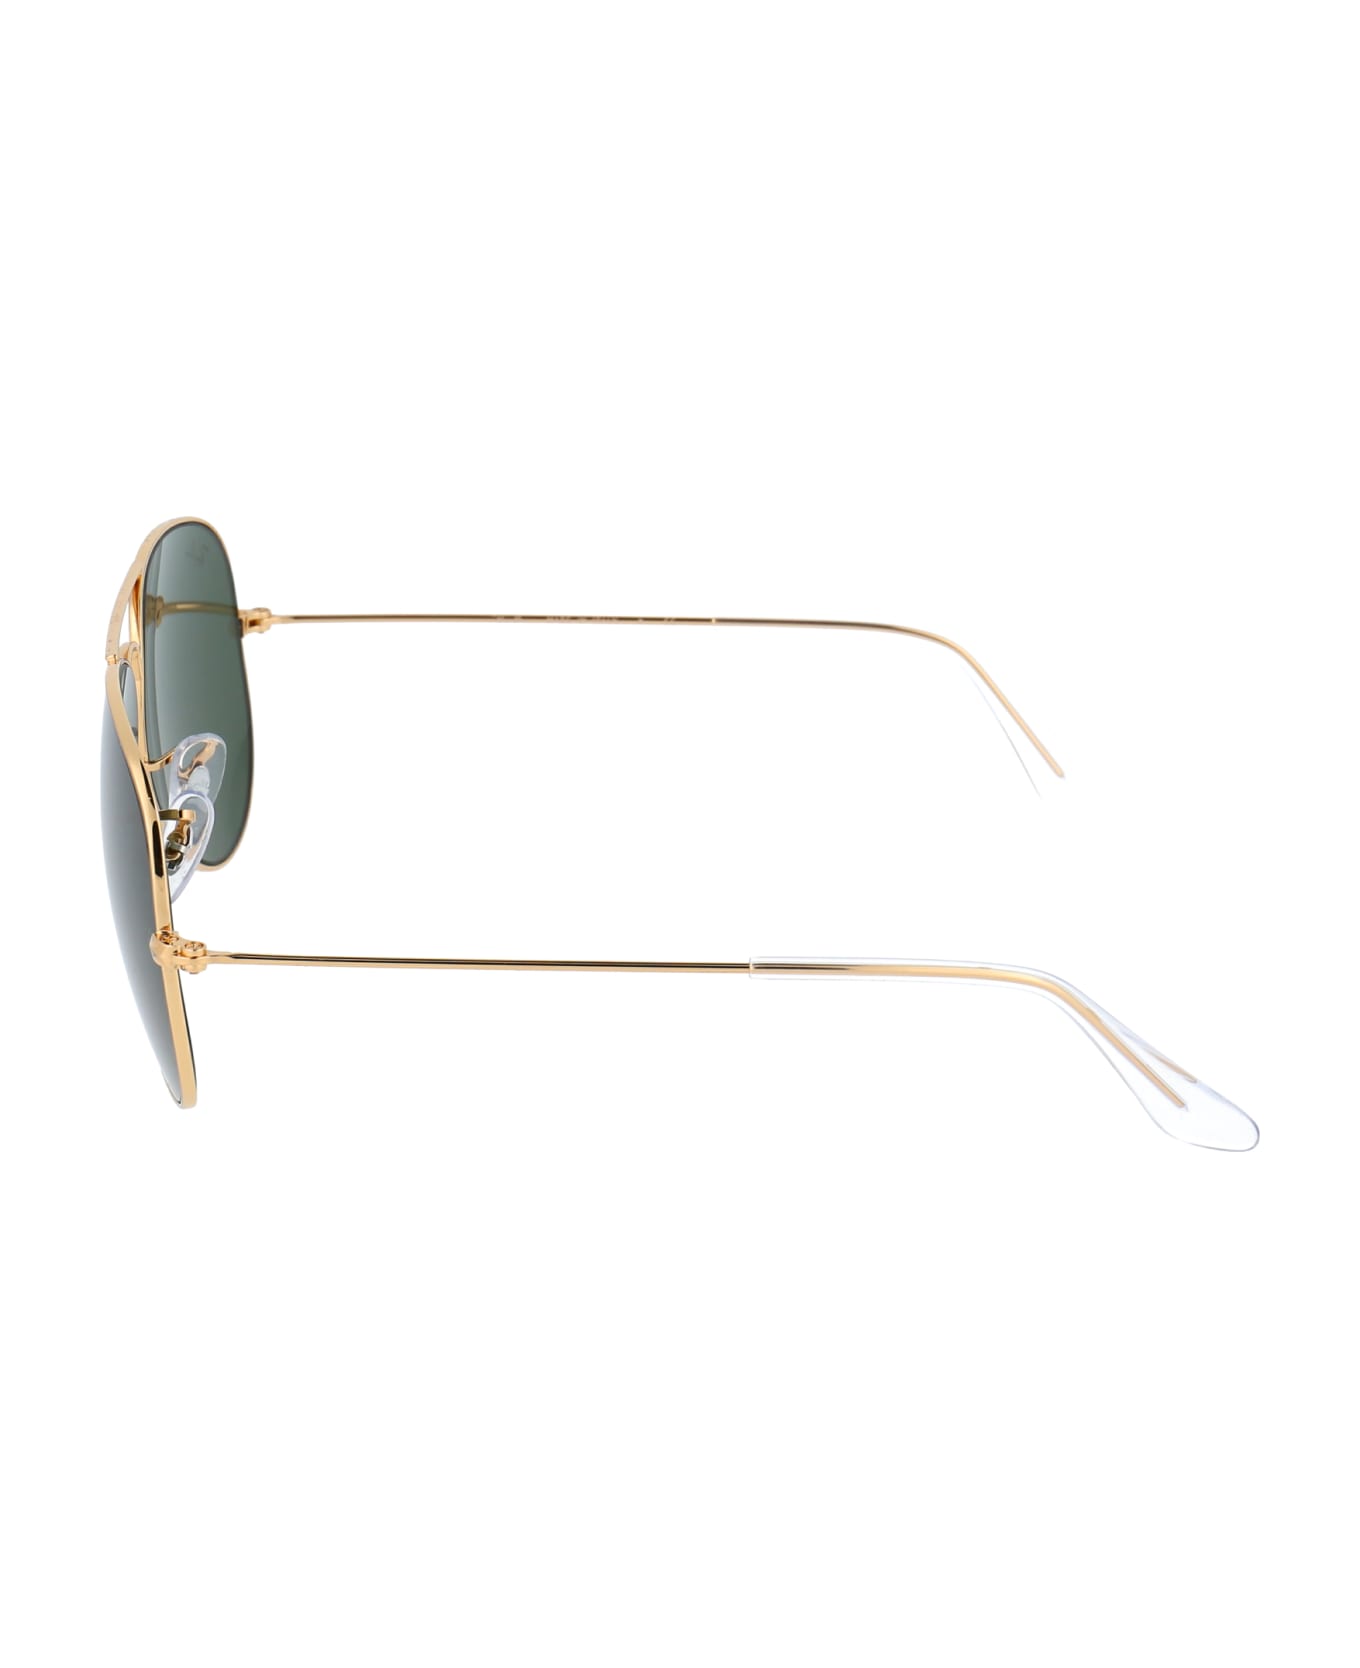 Ray-Ban Aviator Sunglasses - L0205 GOLD